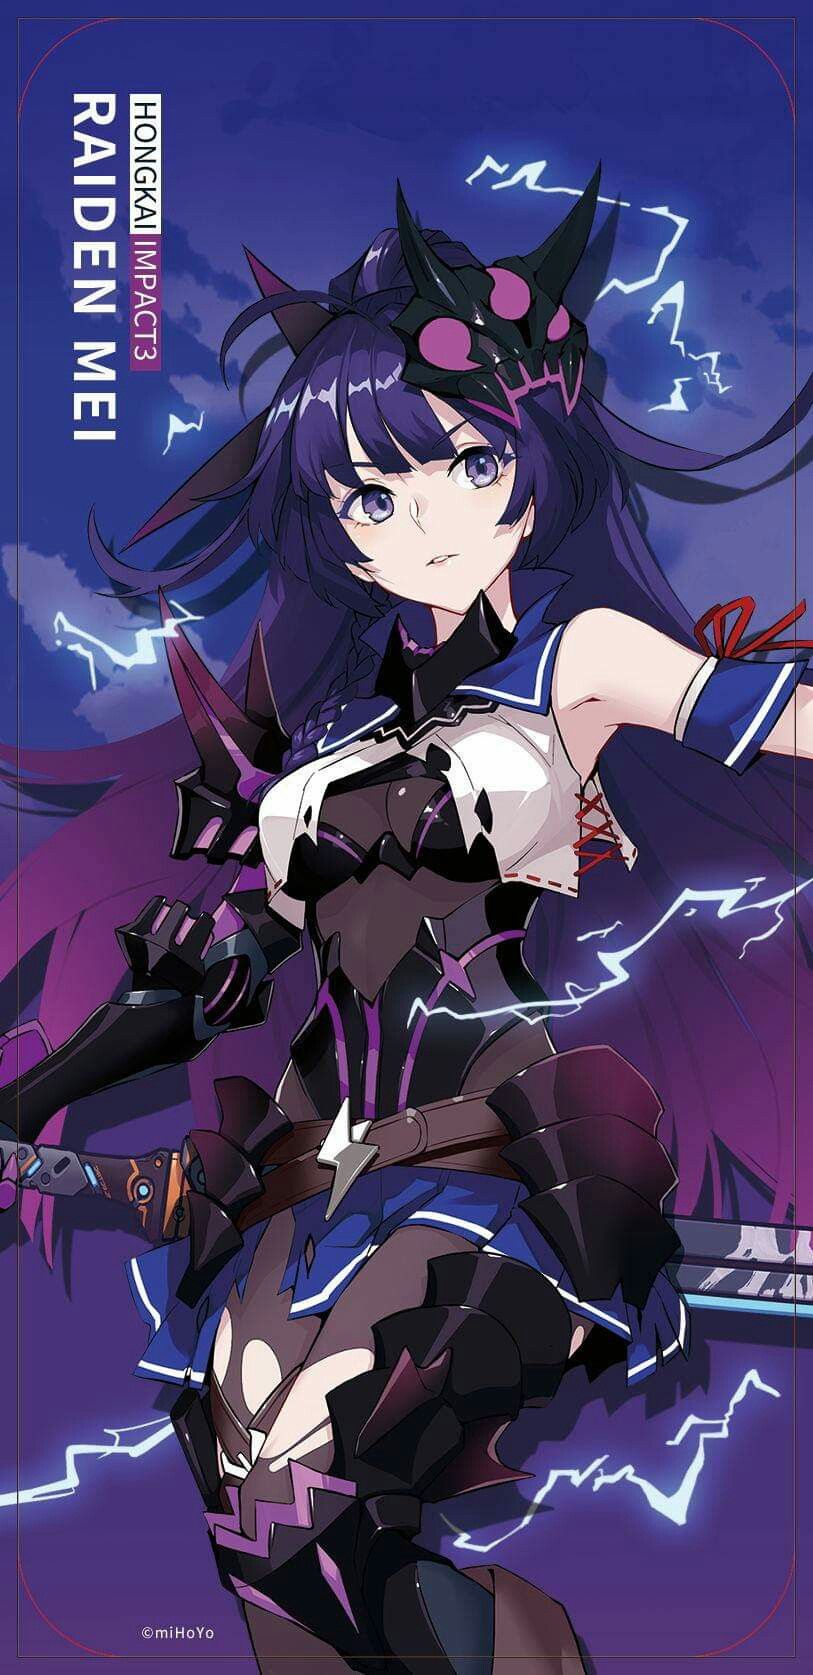 Battlesuit lightning empress. Kawaii anime, Anime warrior, Anime art girl